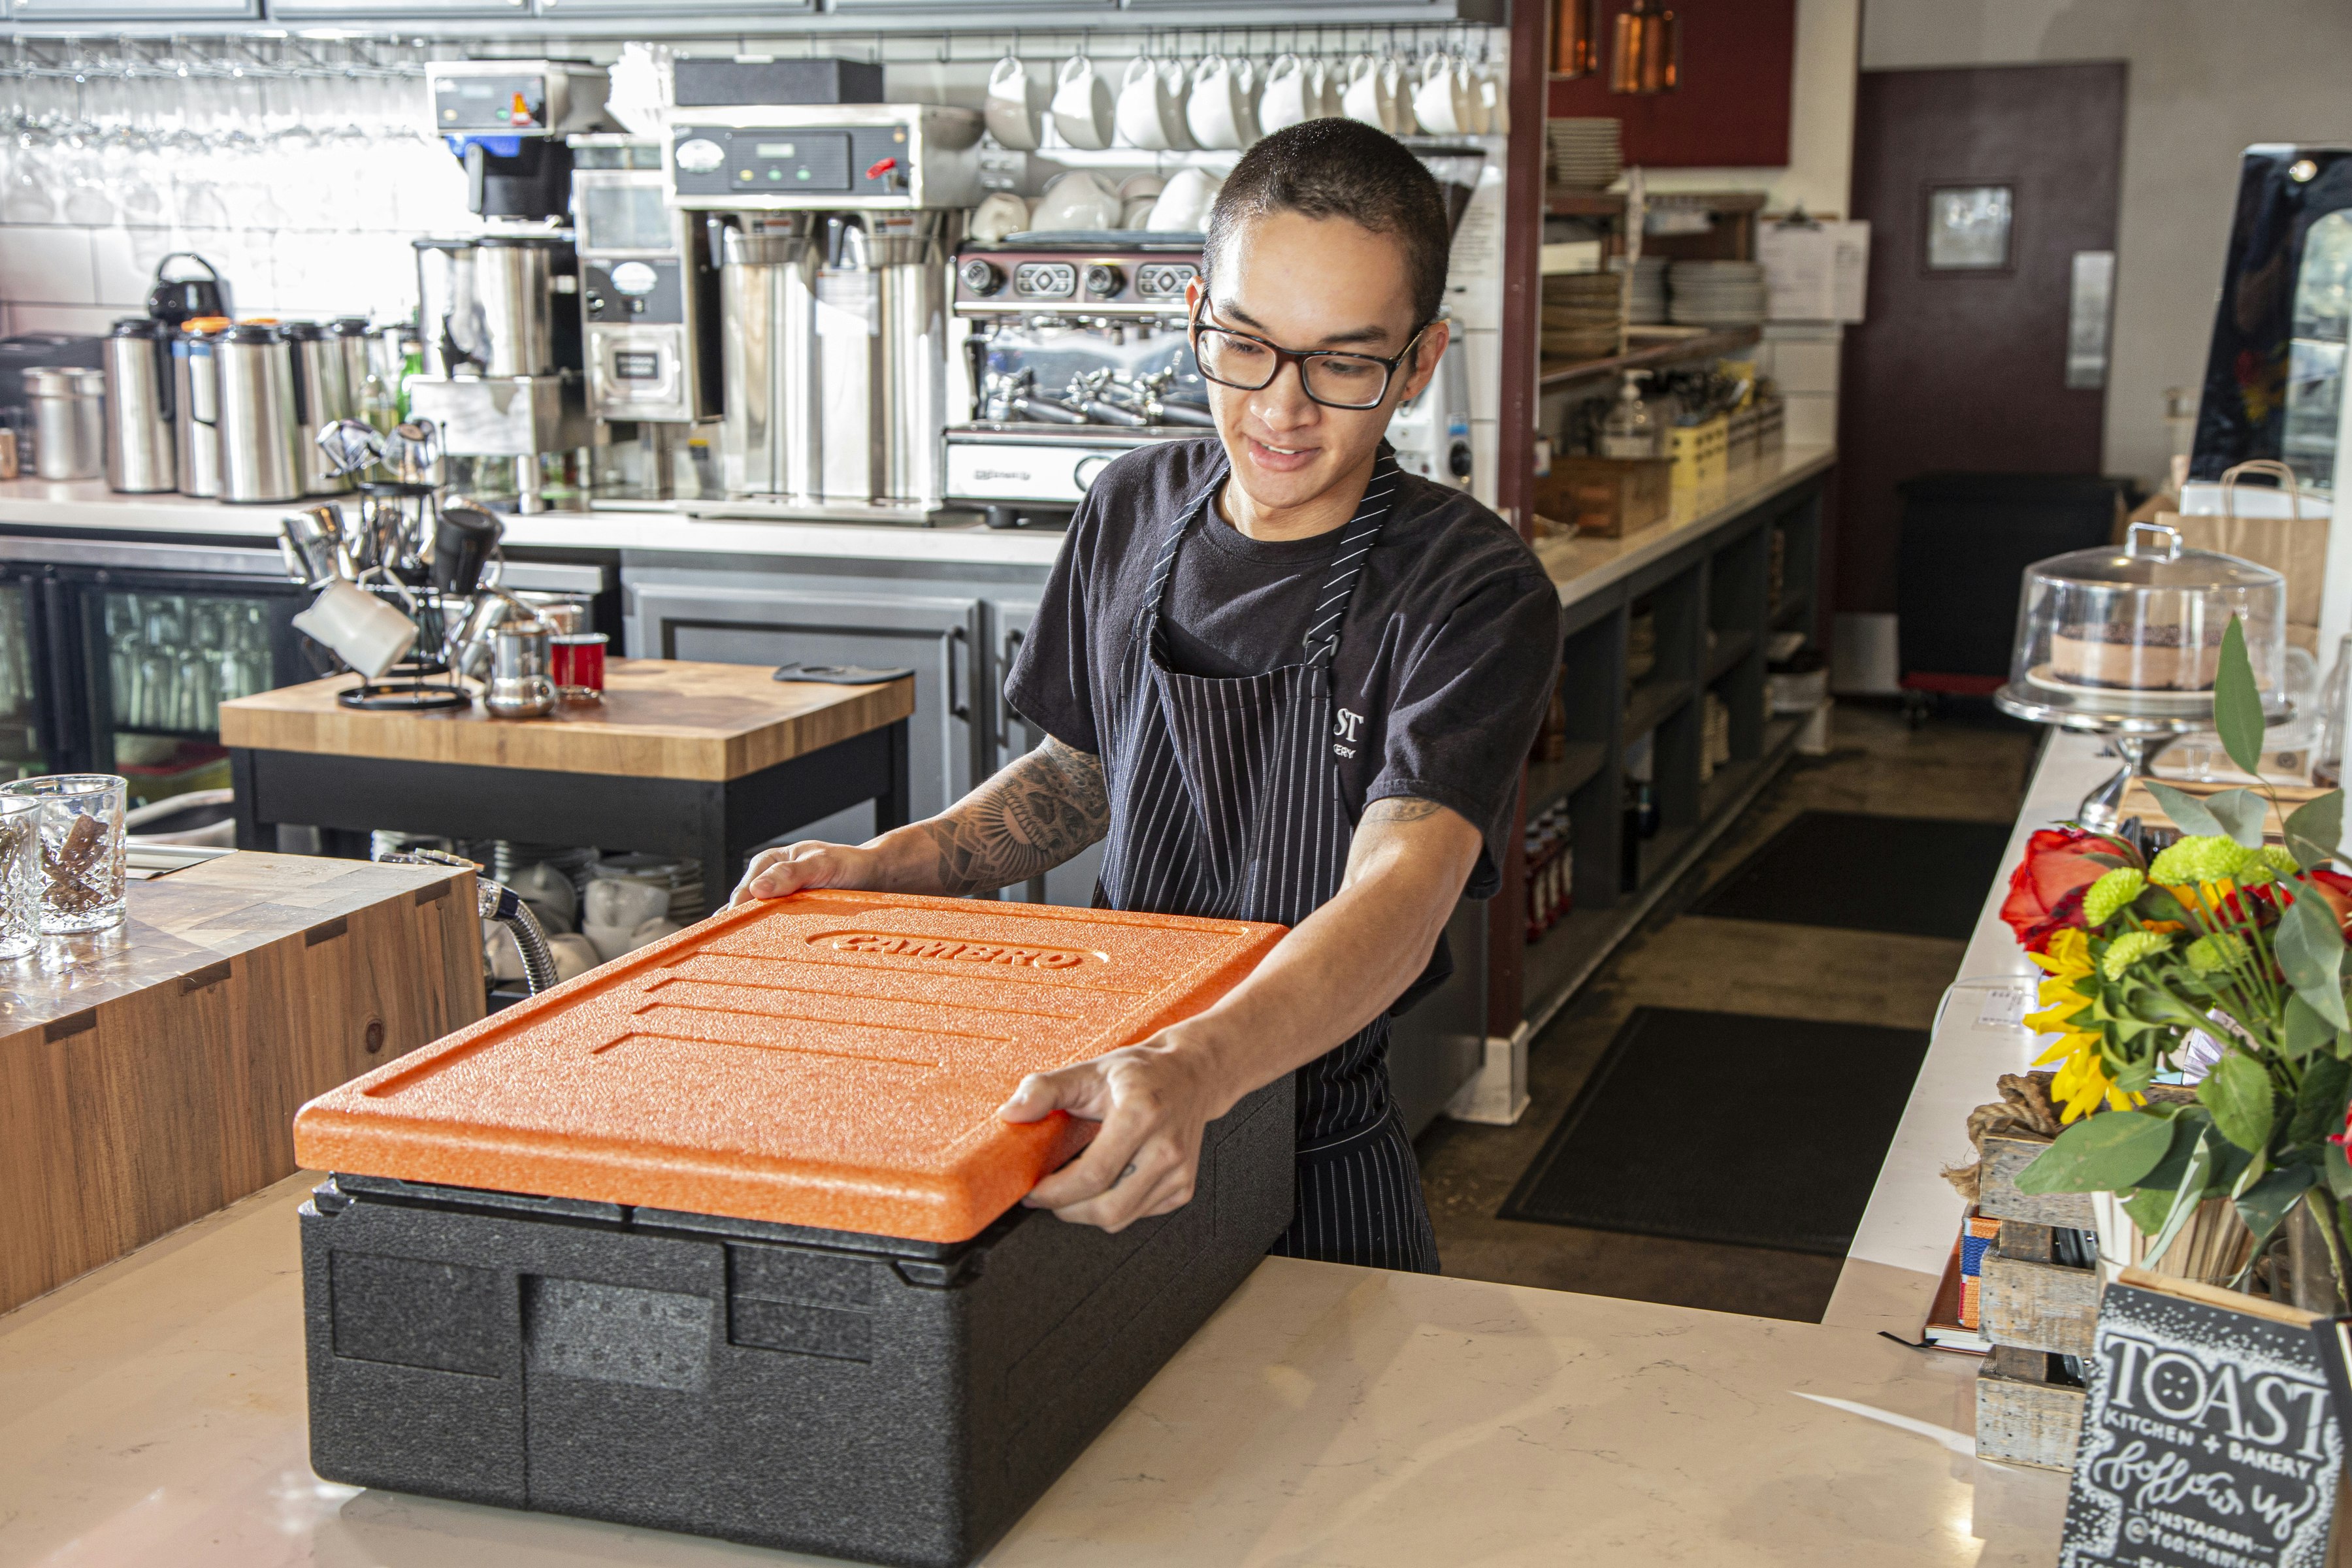 Caja isotérmica para transportar pizza Cam GoBox® FB121 - IberGastro -  Suministros de hostelería online 24h